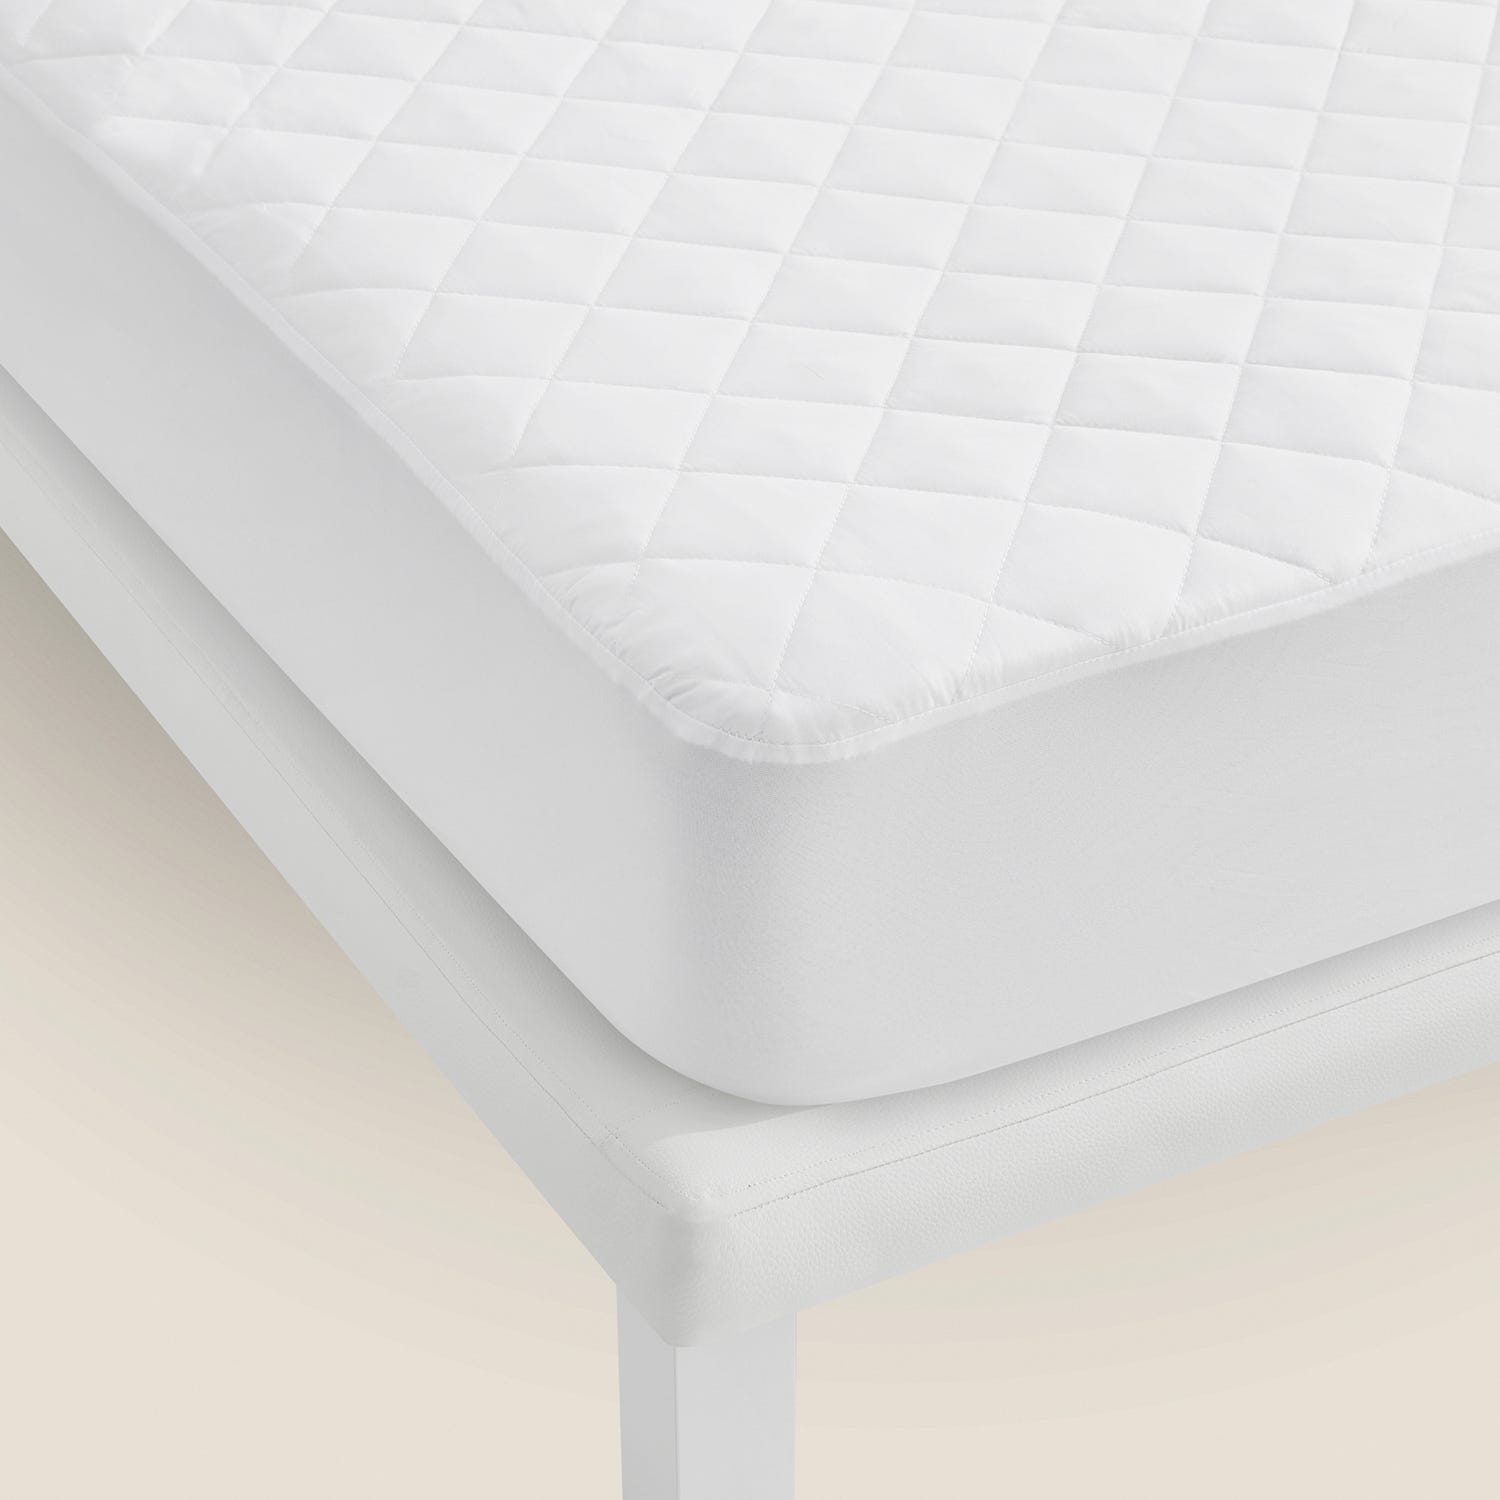 Protector colchón ajustable transpirable 150X190/200 cm